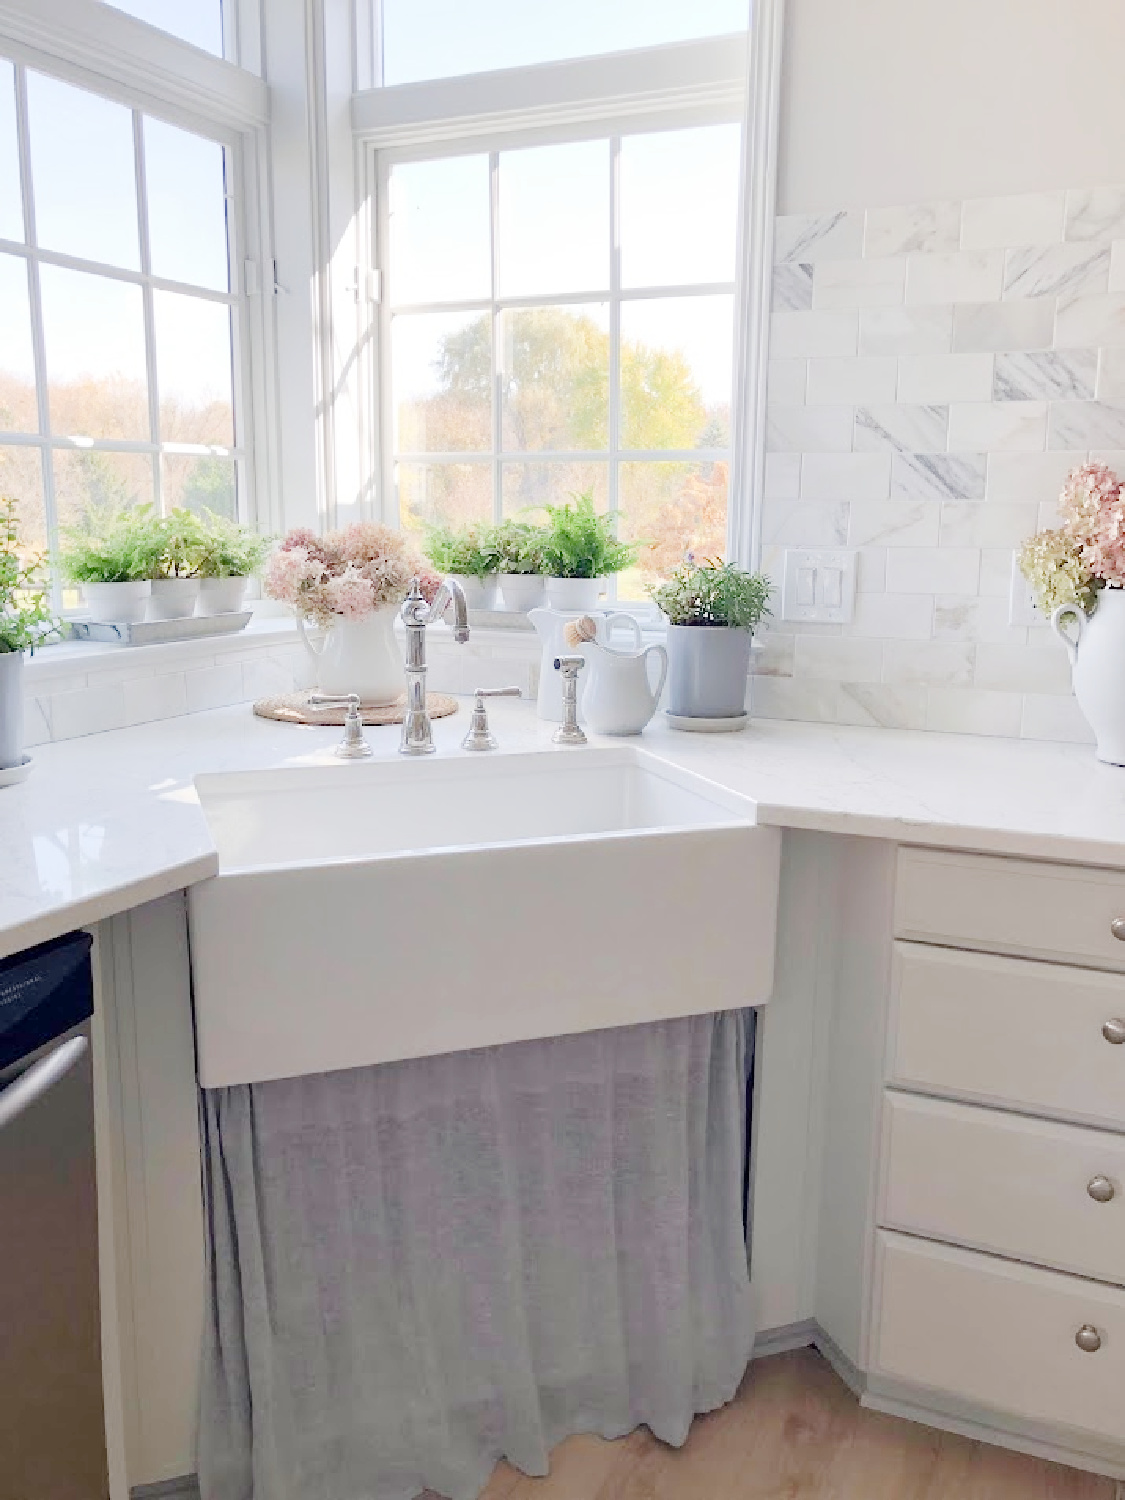 Kitchen sink ideas to inspire your next renovation